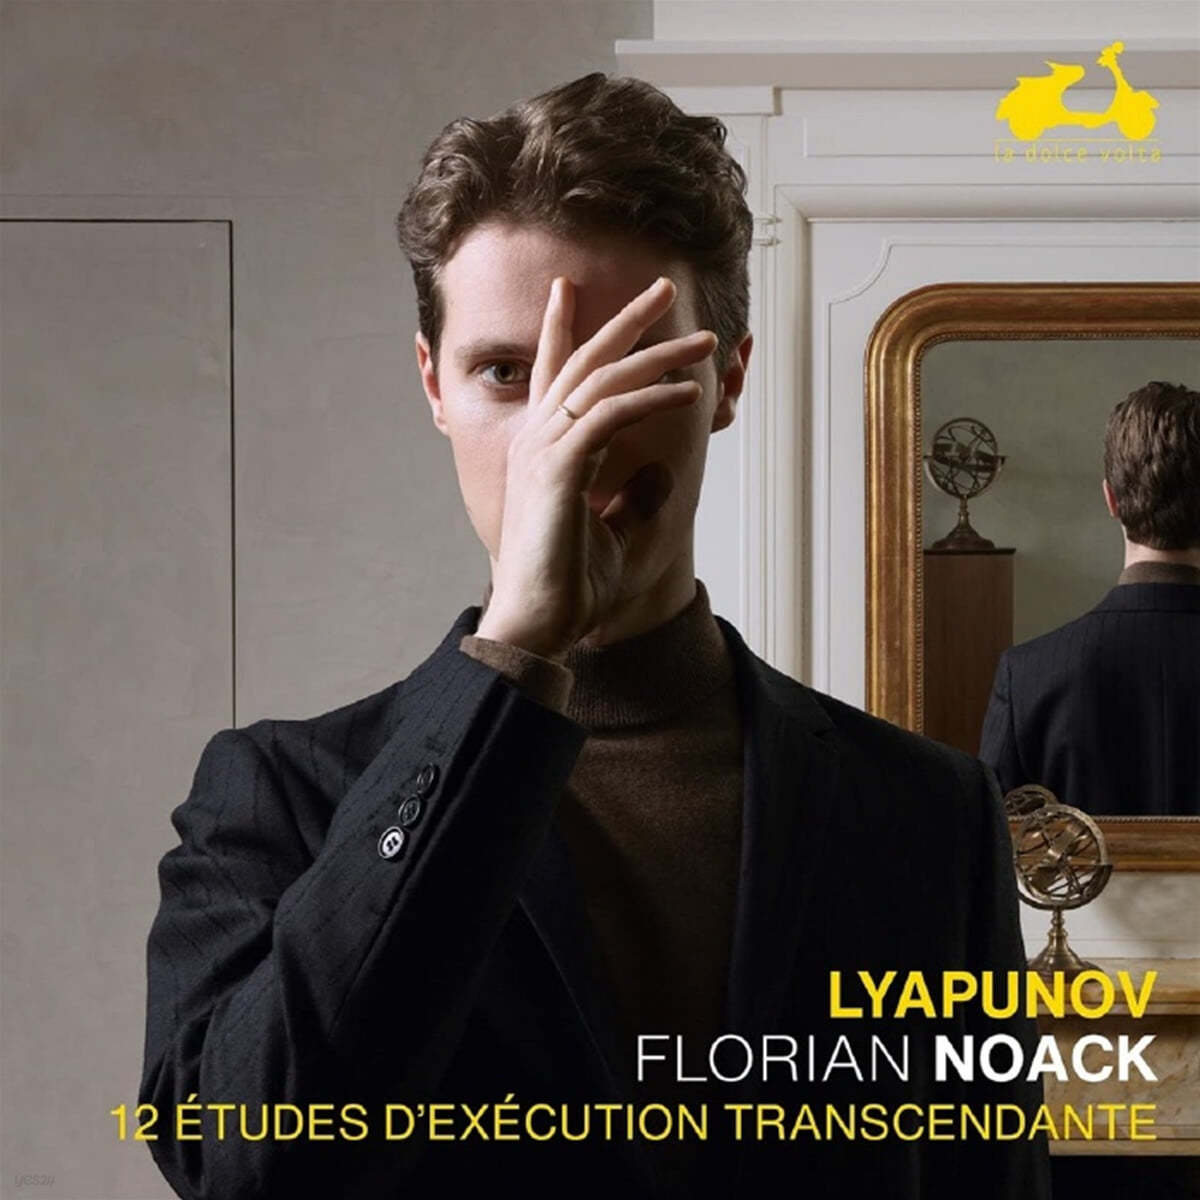 Florian Noack 세르게이 랴푸노프: 12개의 초절 기교 연습곡 - 플로리안 노악 (Sergei Lyapunov: 12 Etudes D'Execution Transcendante Op.11) 